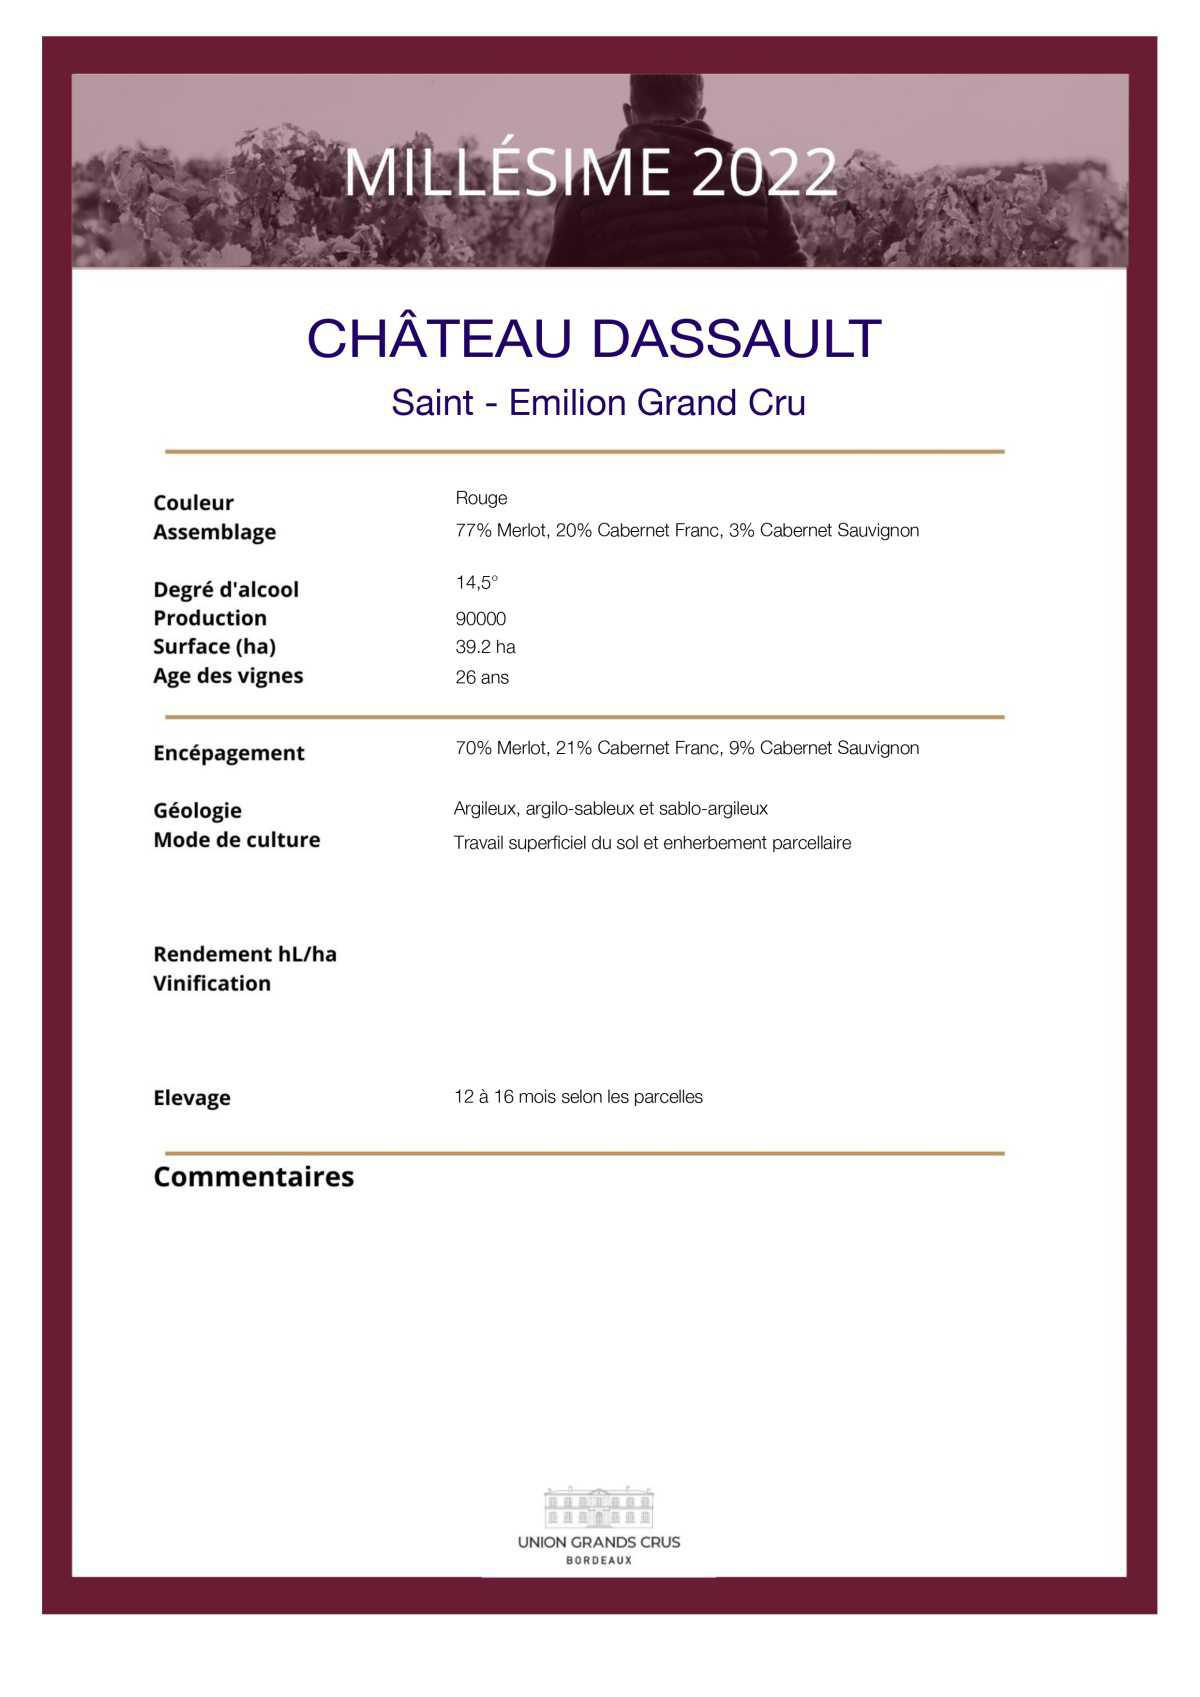  Château Dassault